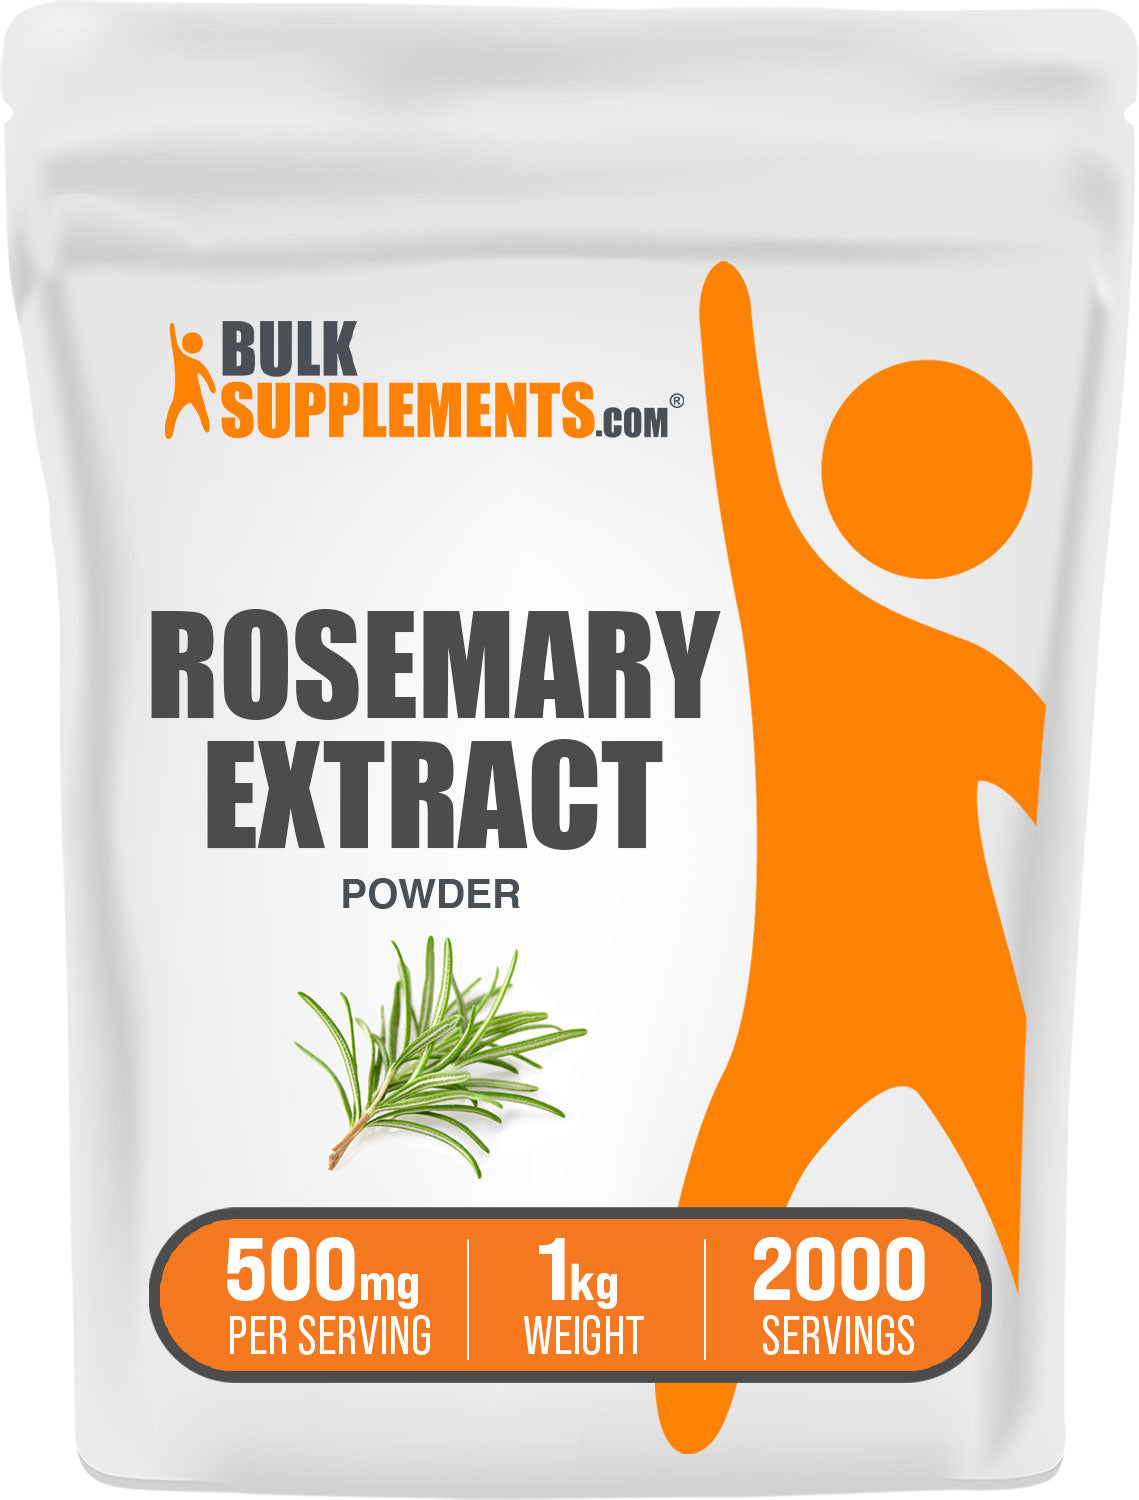 BulkSupplements Rosemary Extract Powder 1kg bag